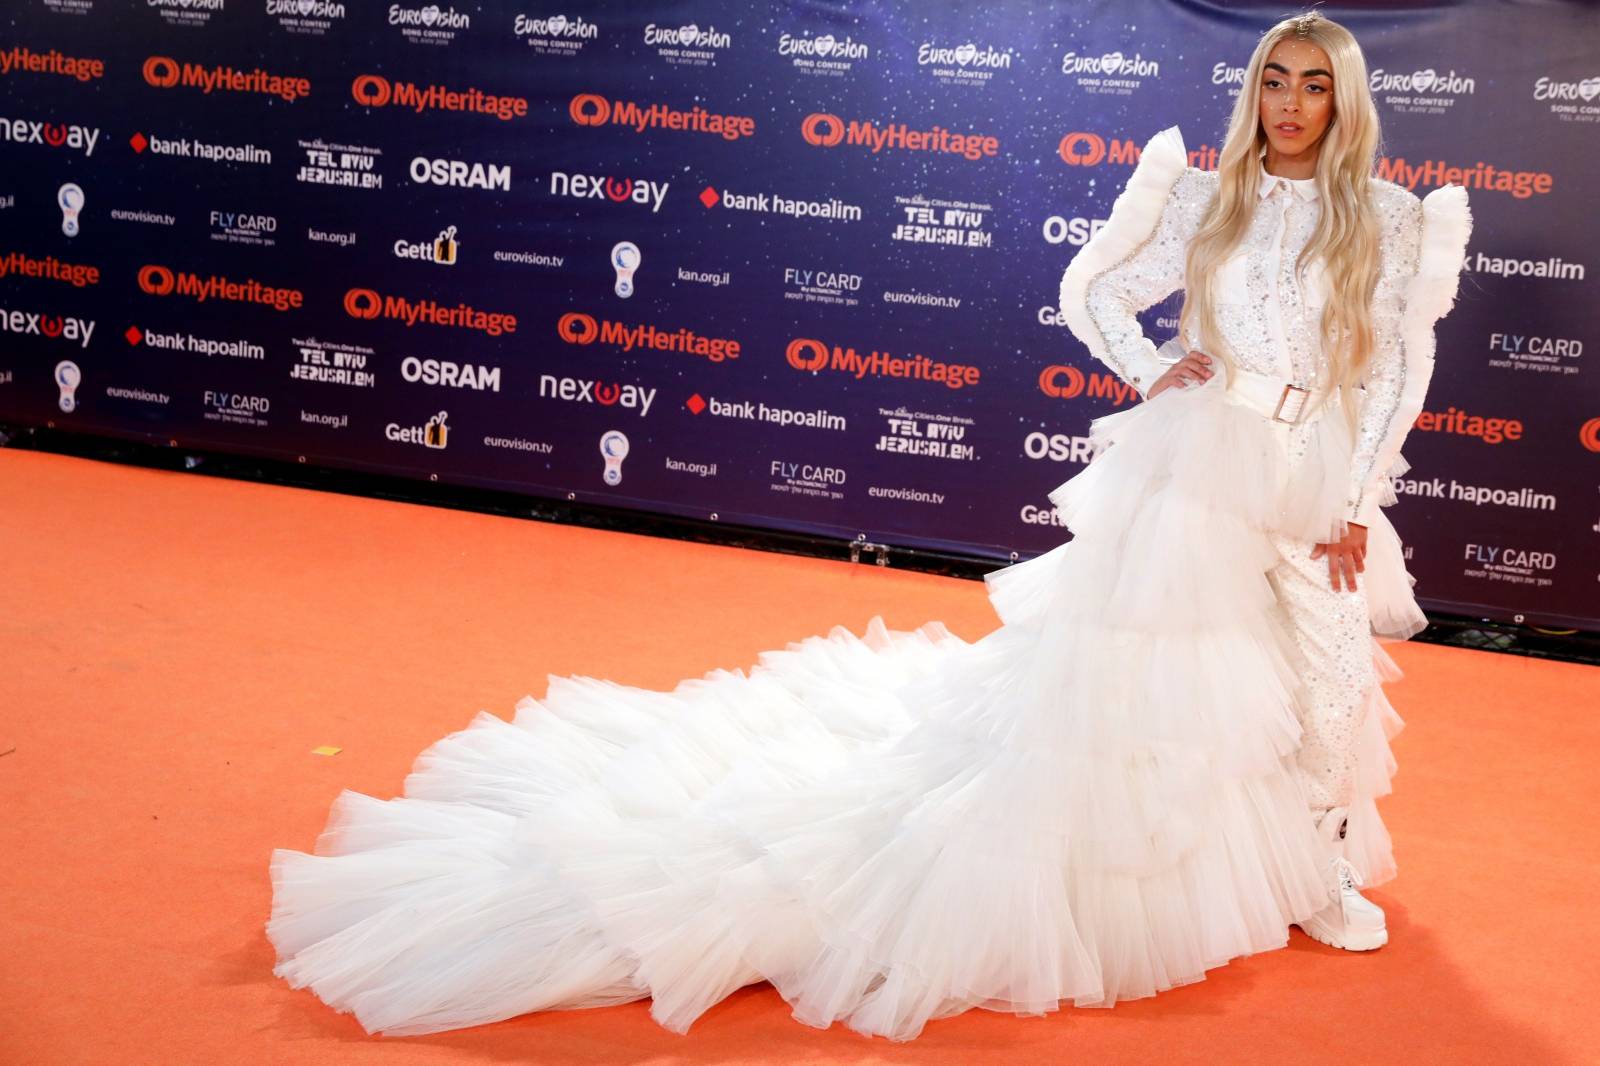 Eurovision 2019 Orange Carpet in Tel Aviv, Israel